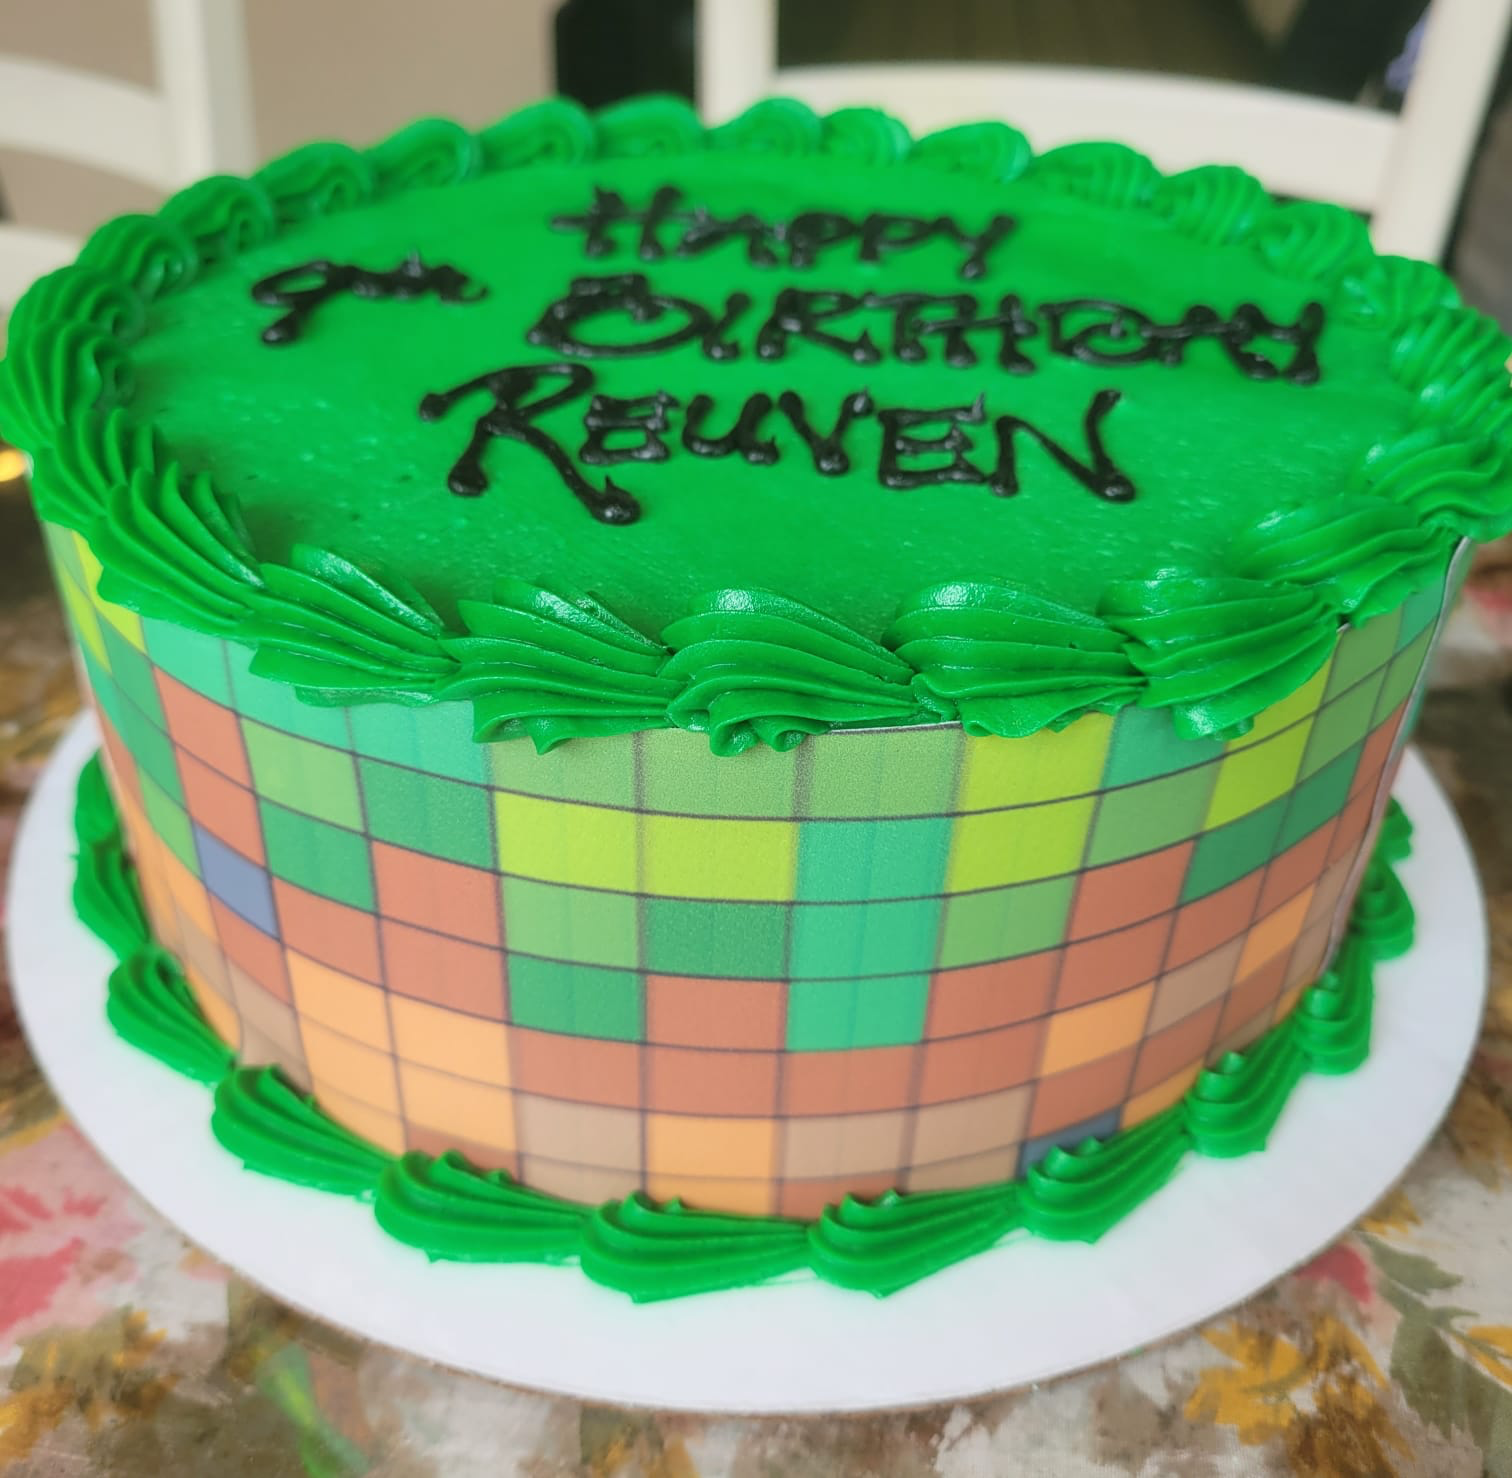 Minecraft Themed Cake n' cupcakes 👾🧁 #pastelcakesq8 #birthdaycake  #cupcakes | Instagram